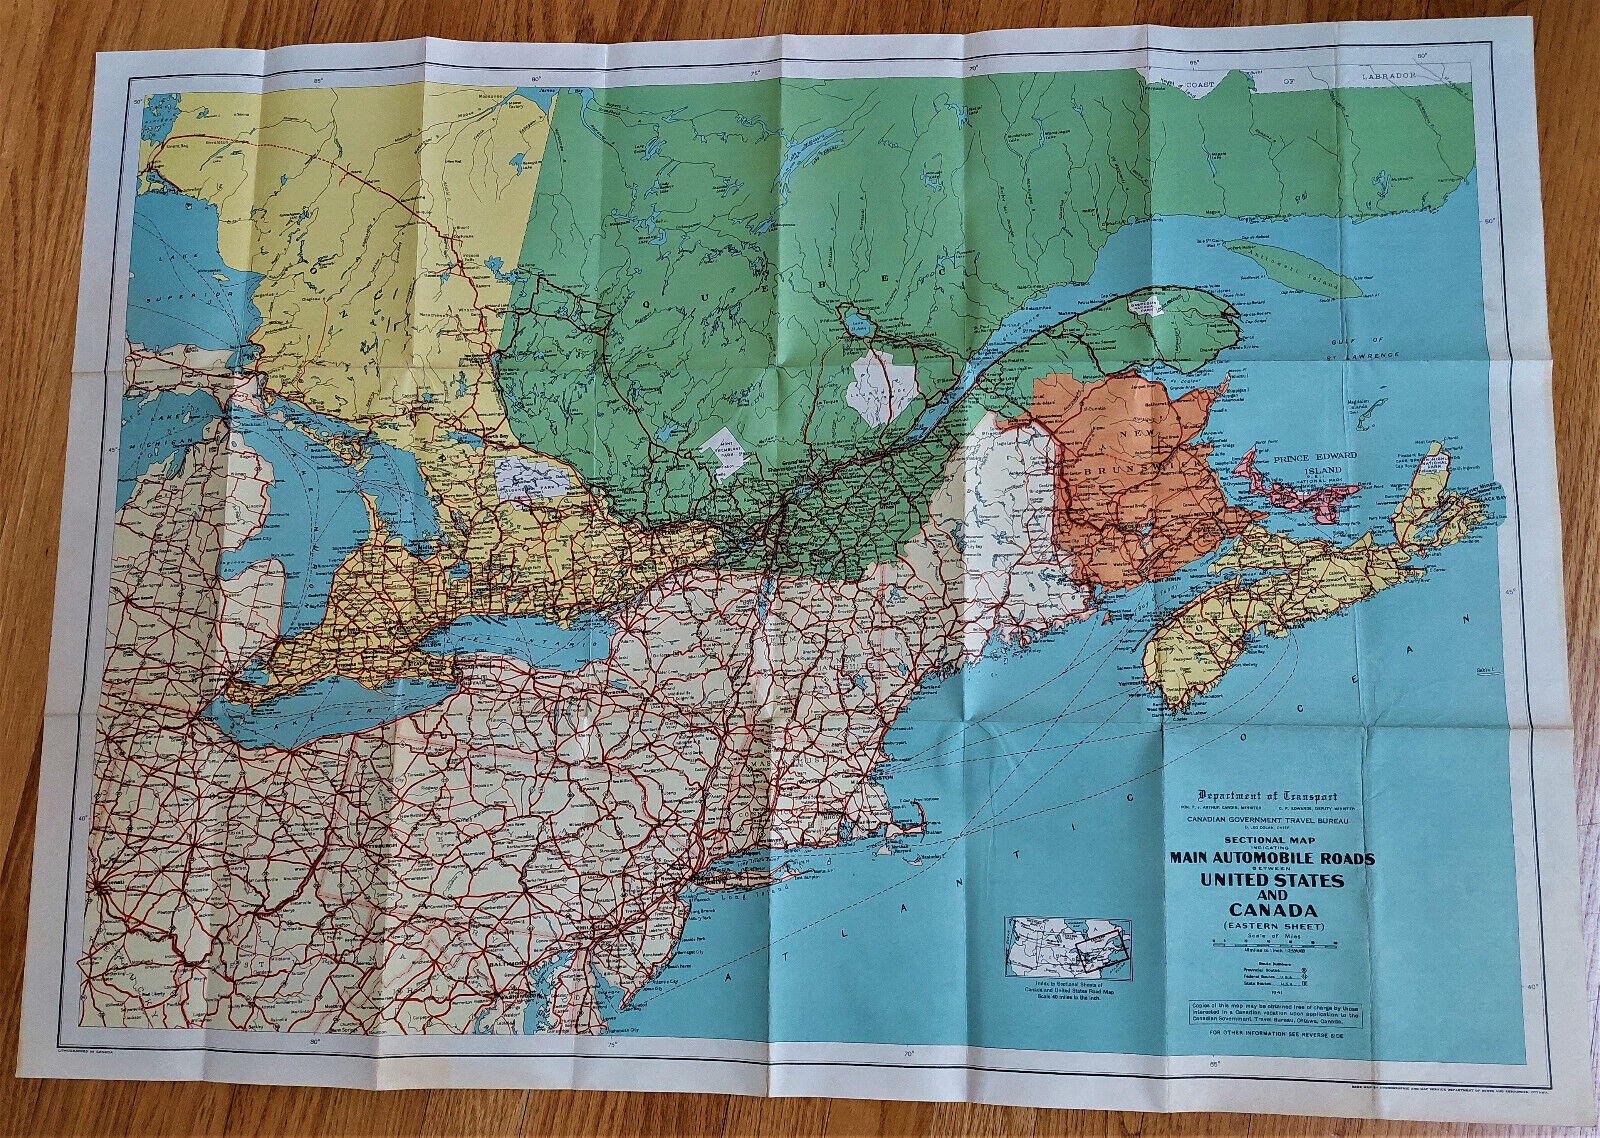 1941 Automobile Roads between Canada & US, Eastern sheet, Quebec, Ontario, 35\